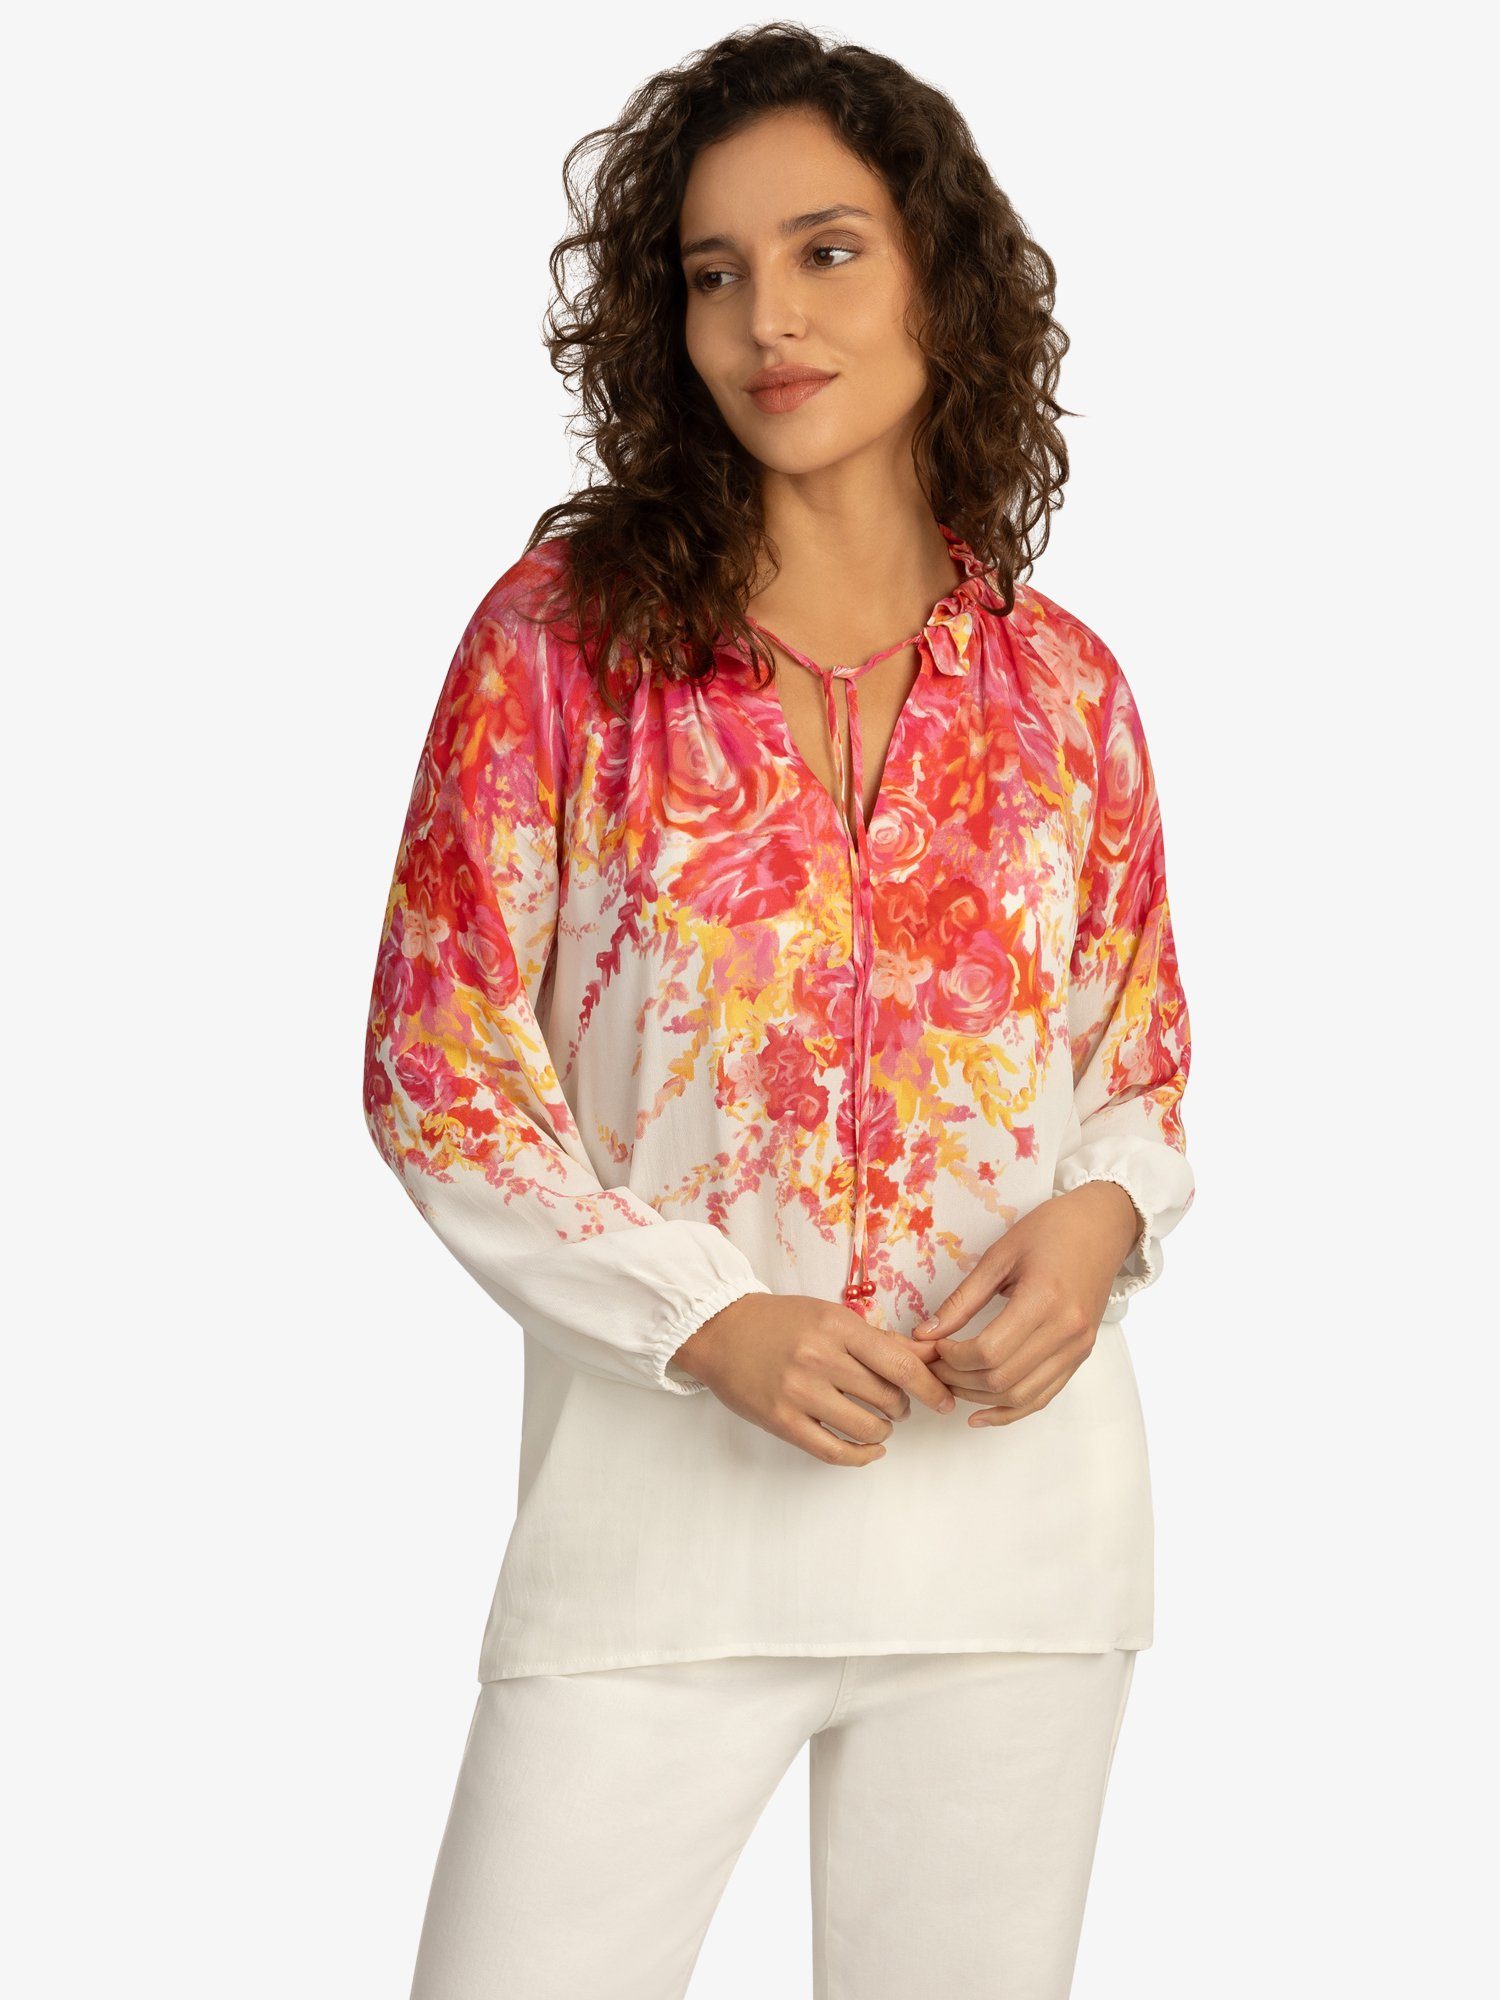 mint & mia Blusenshirt aus hochwertigem Viskose Material mit Feminin Stil